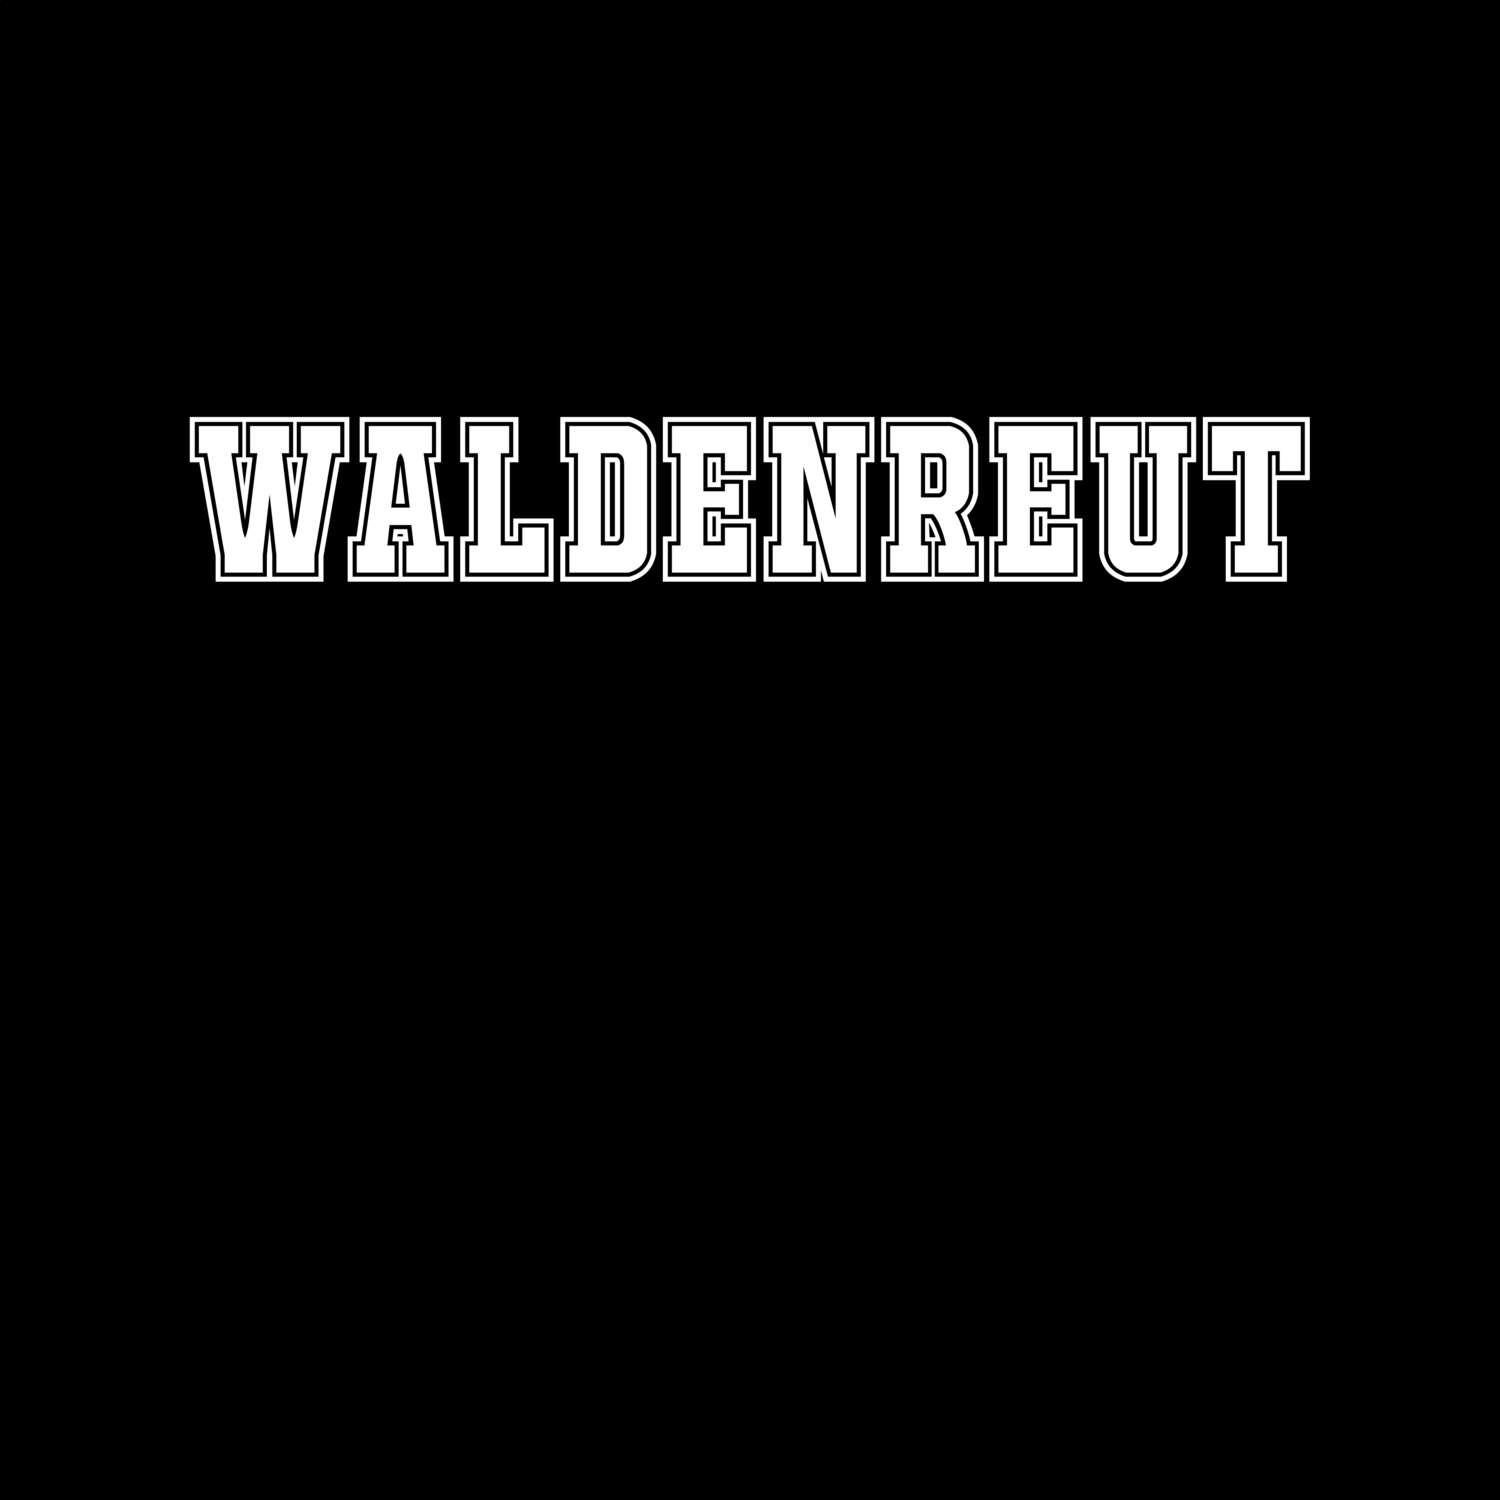 Waldenreut T-Shirt »Classic«